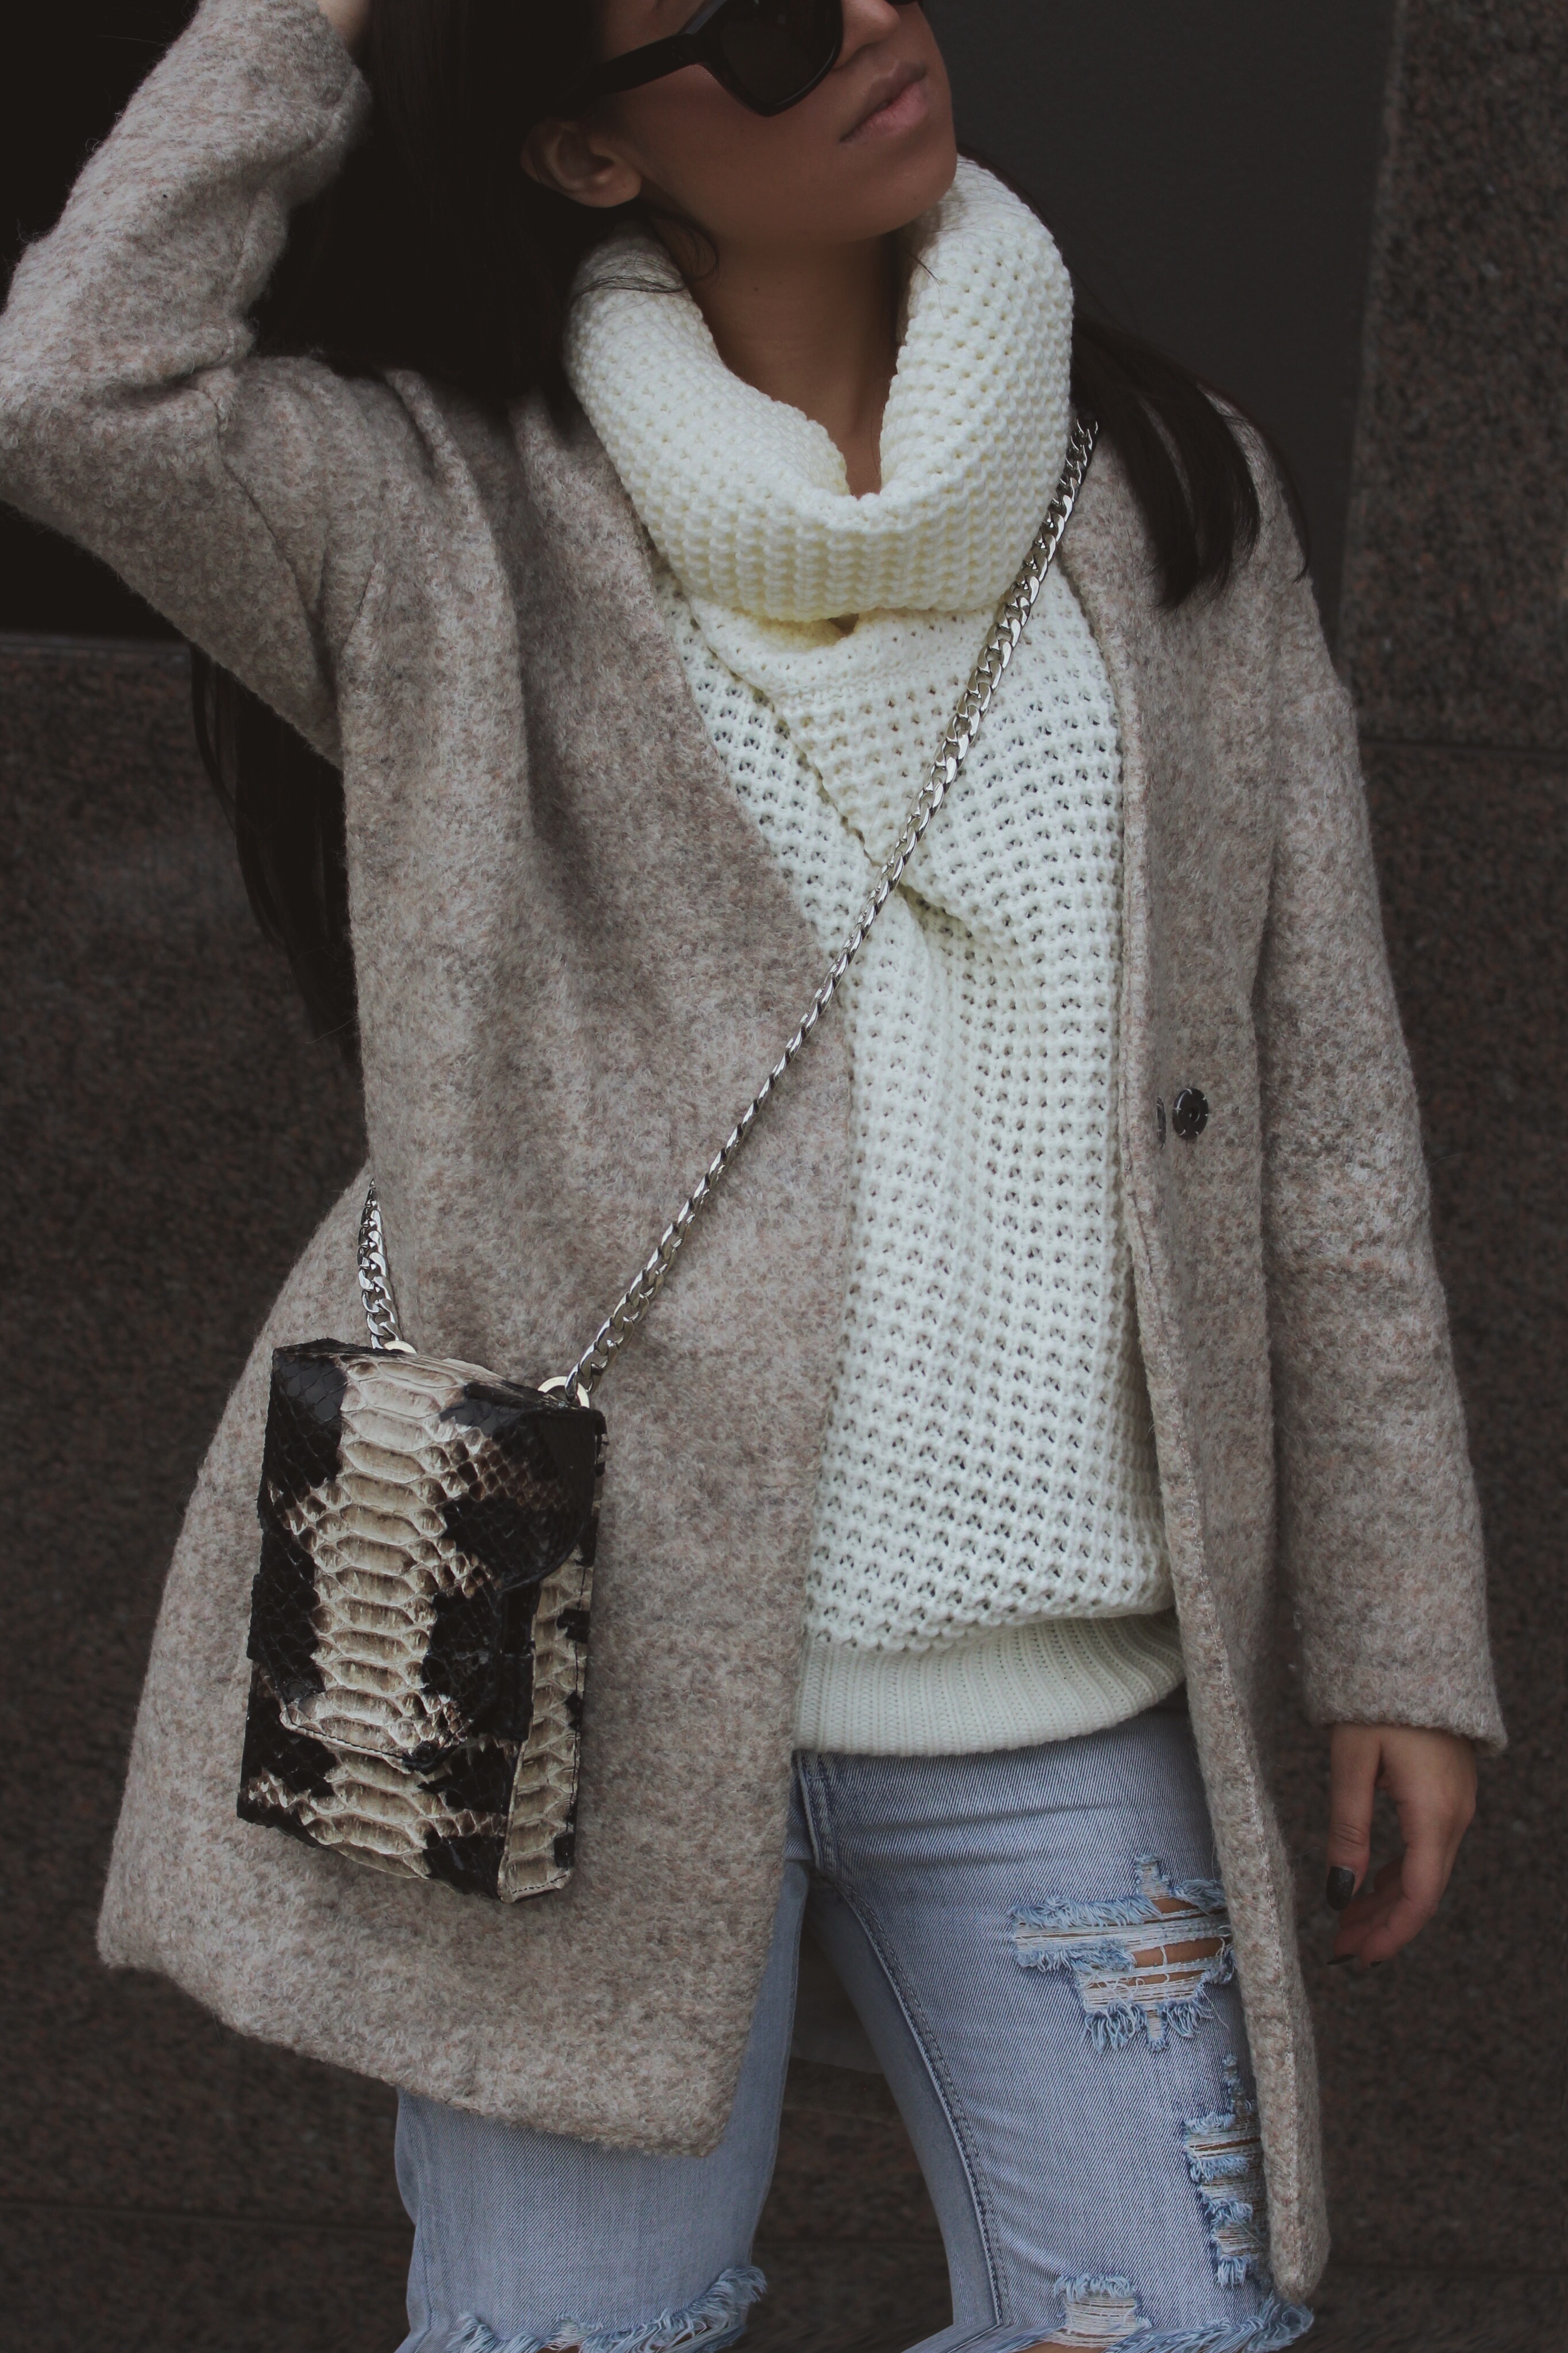 LA blogger Tania Sarin with turtleneck knit and snakeskin crossbody